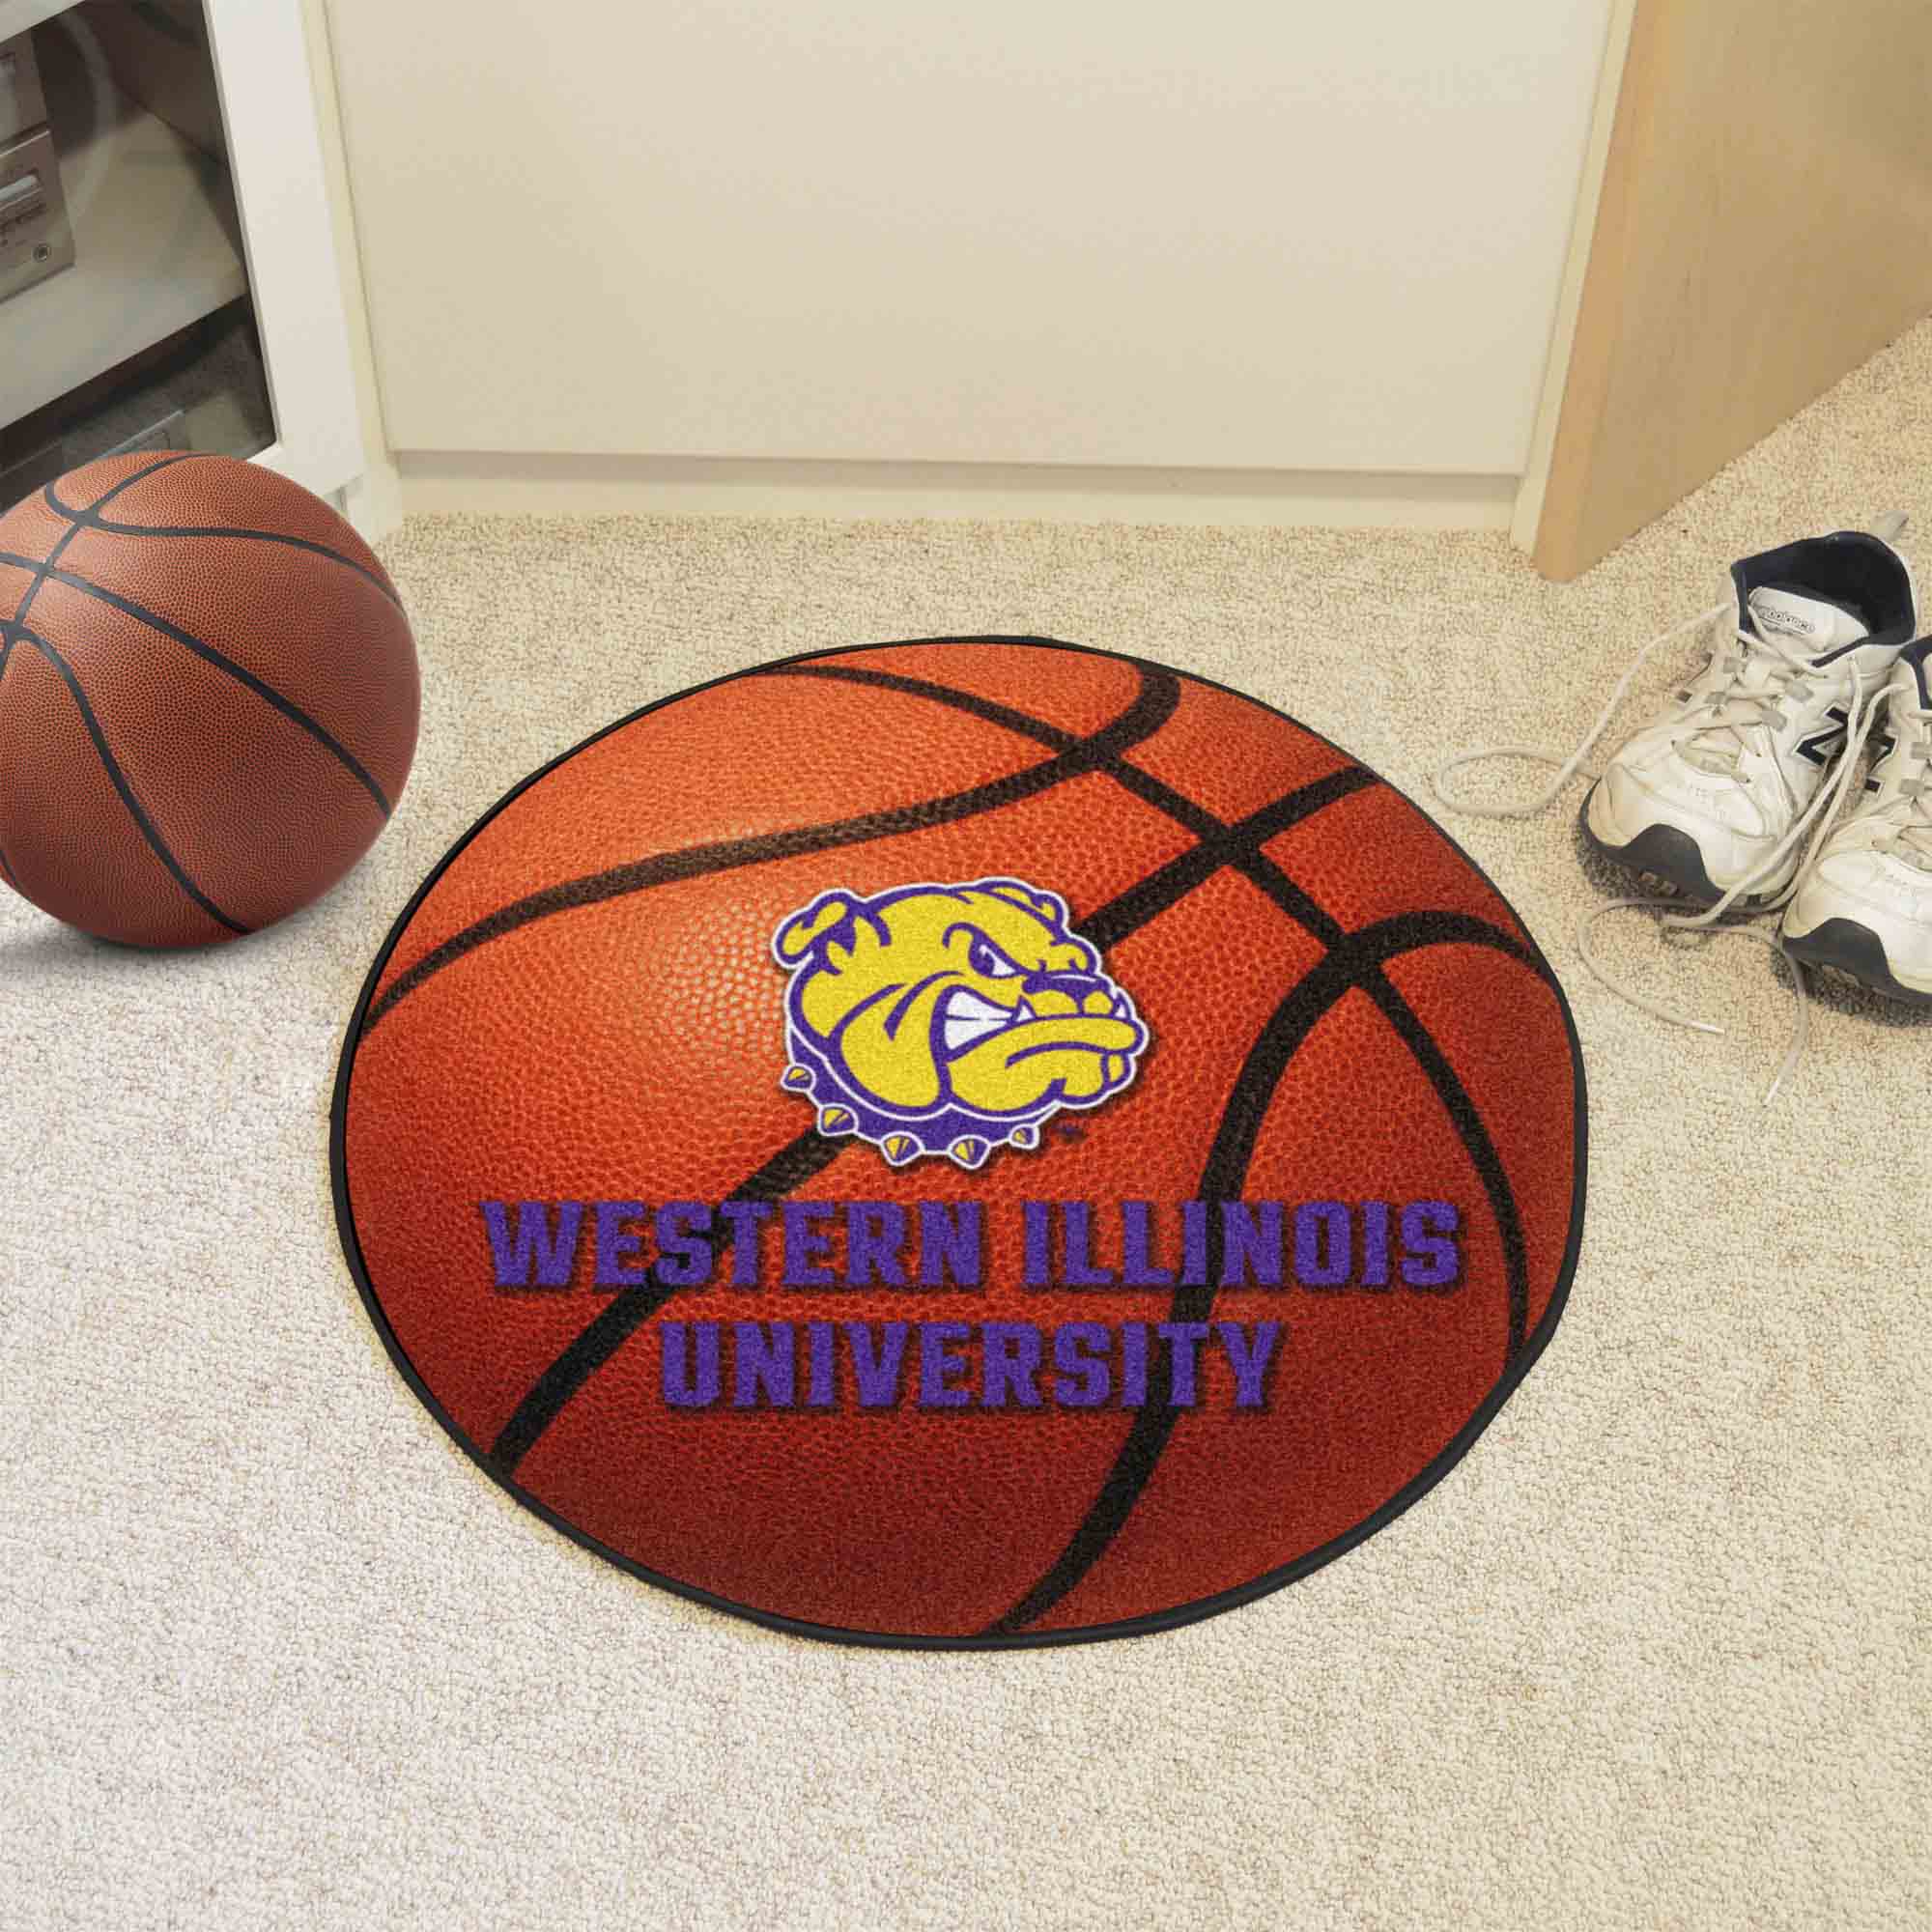 Western Illinois Basketball Mat 27" diameter - image 2 of 2